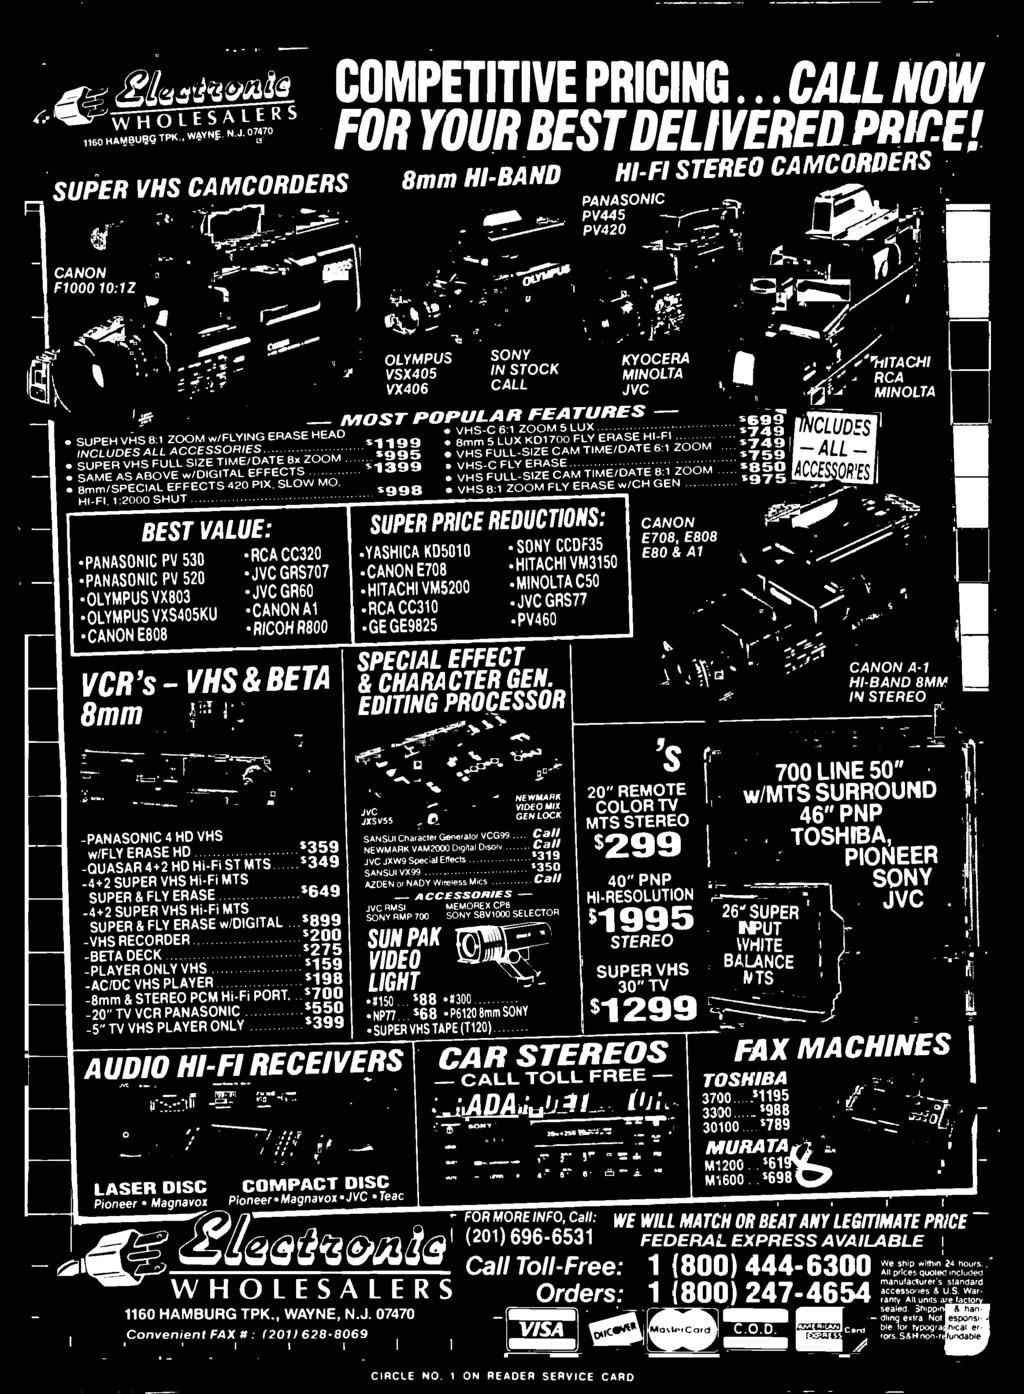 FLY ERASE HD $359 -QUASAR 4+2 HD Hi-Fi ST MTS $349-4+2 SUPER VHS Hi-Fi MTS SUPER & FLY ERASE $649-4+2 SUPER VHS Hi-Fi MTS SUPER & FLY ERASE w DIGITAL $899 -VHS RECORDER $200 -BETA DECK $275 -PLAYER